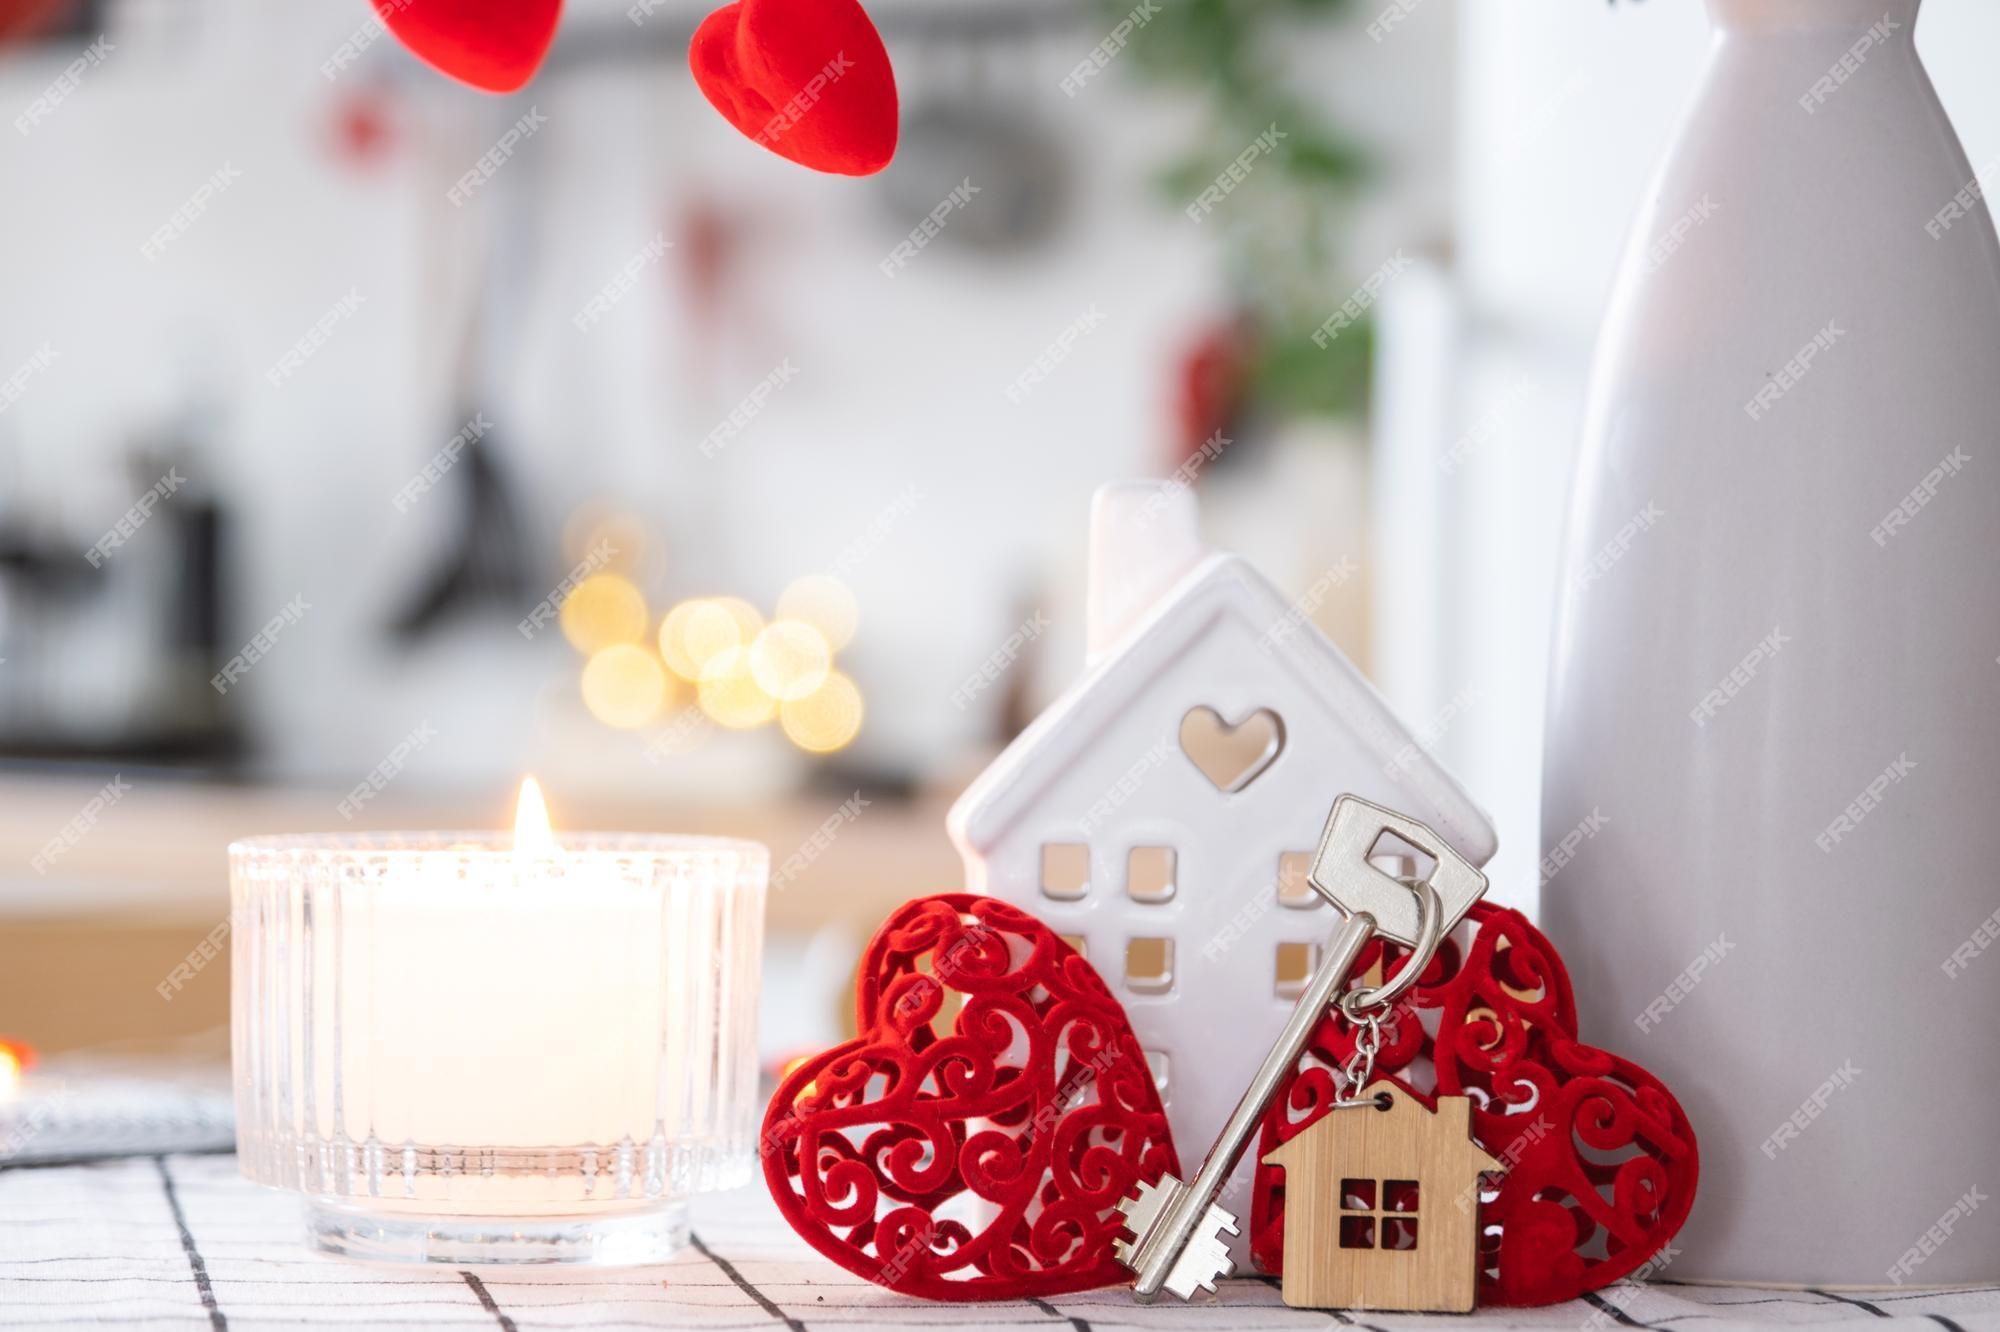 Premium Photo Key To House Of Cozy Home With Valentine Decor On